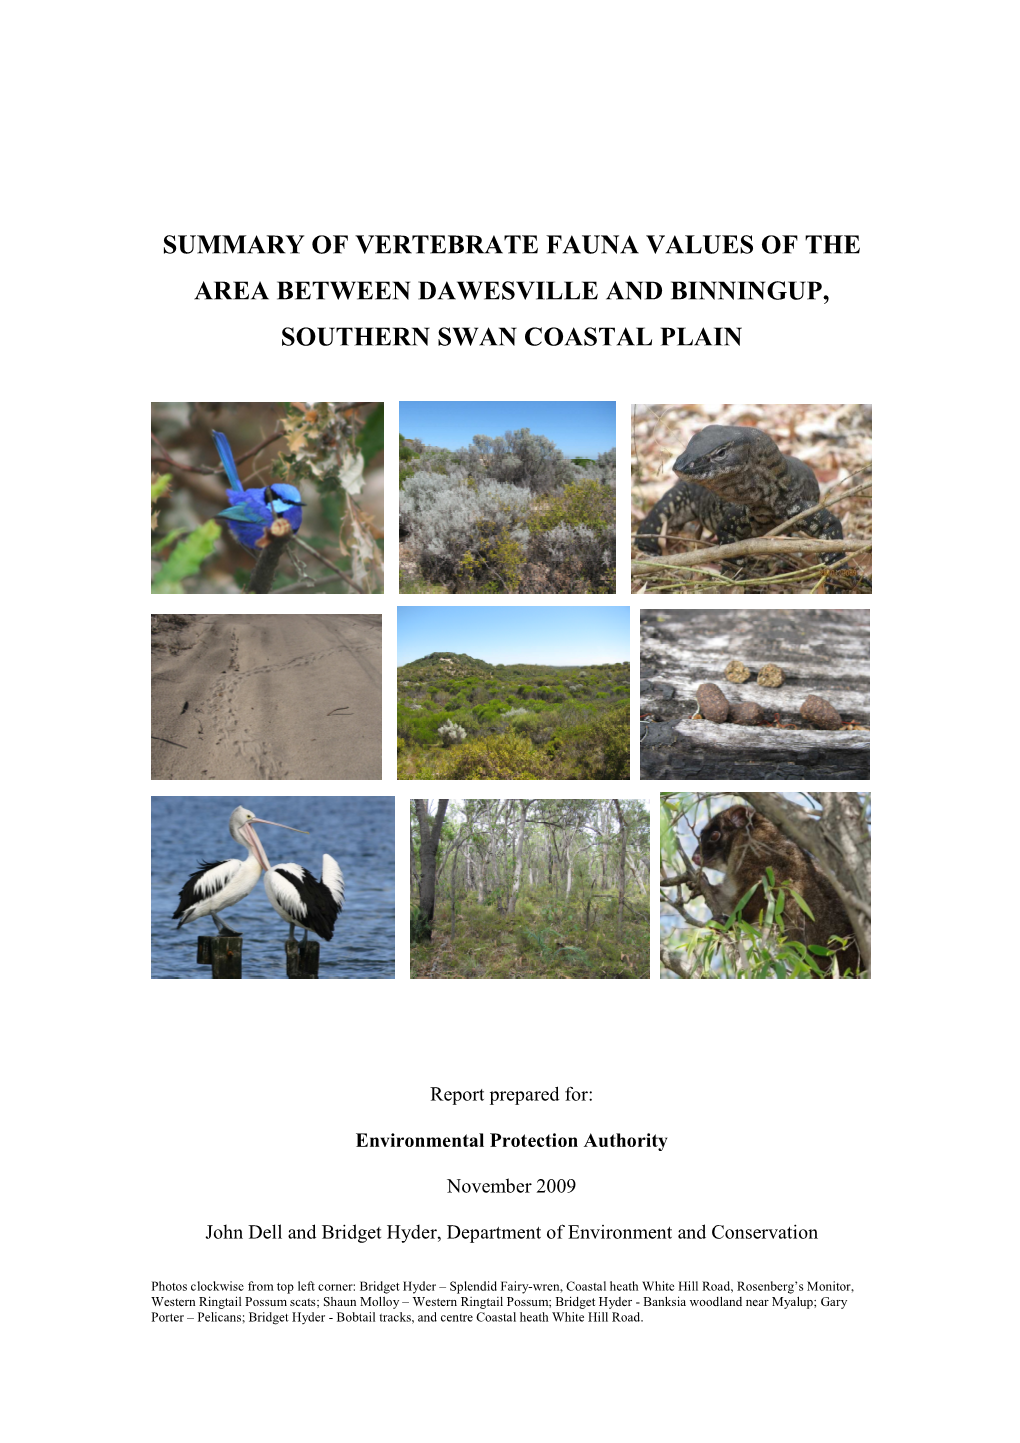 Summary of Vertebrate Fauna Values of the Area Between Dawesville and Binningup, Southern Swan Coastal Plain